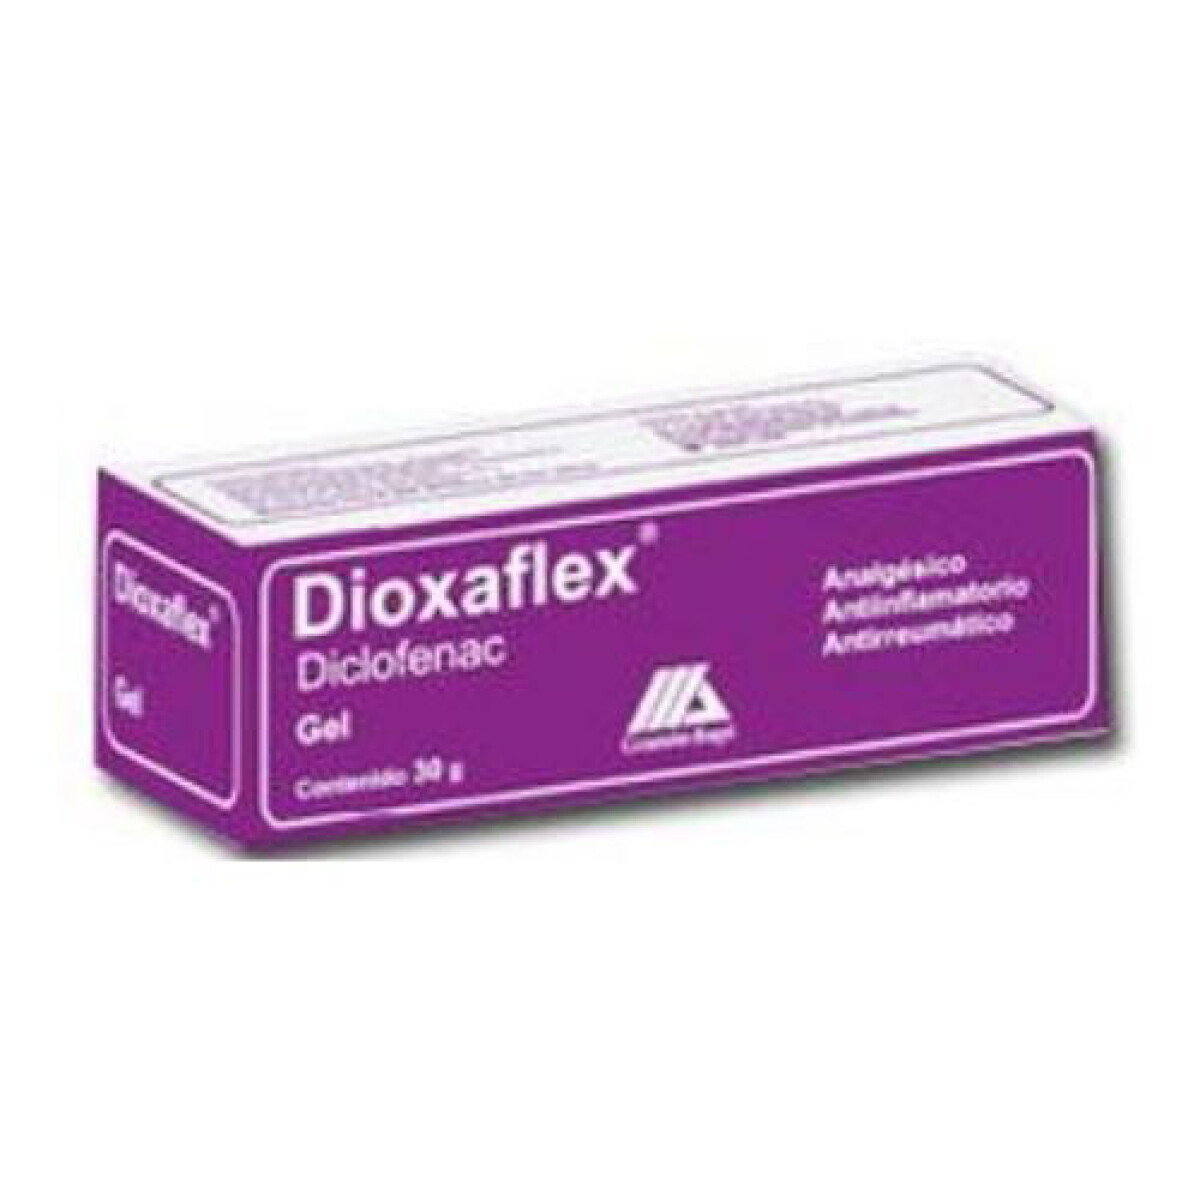 Dioxaflex Gel x 30 GR 